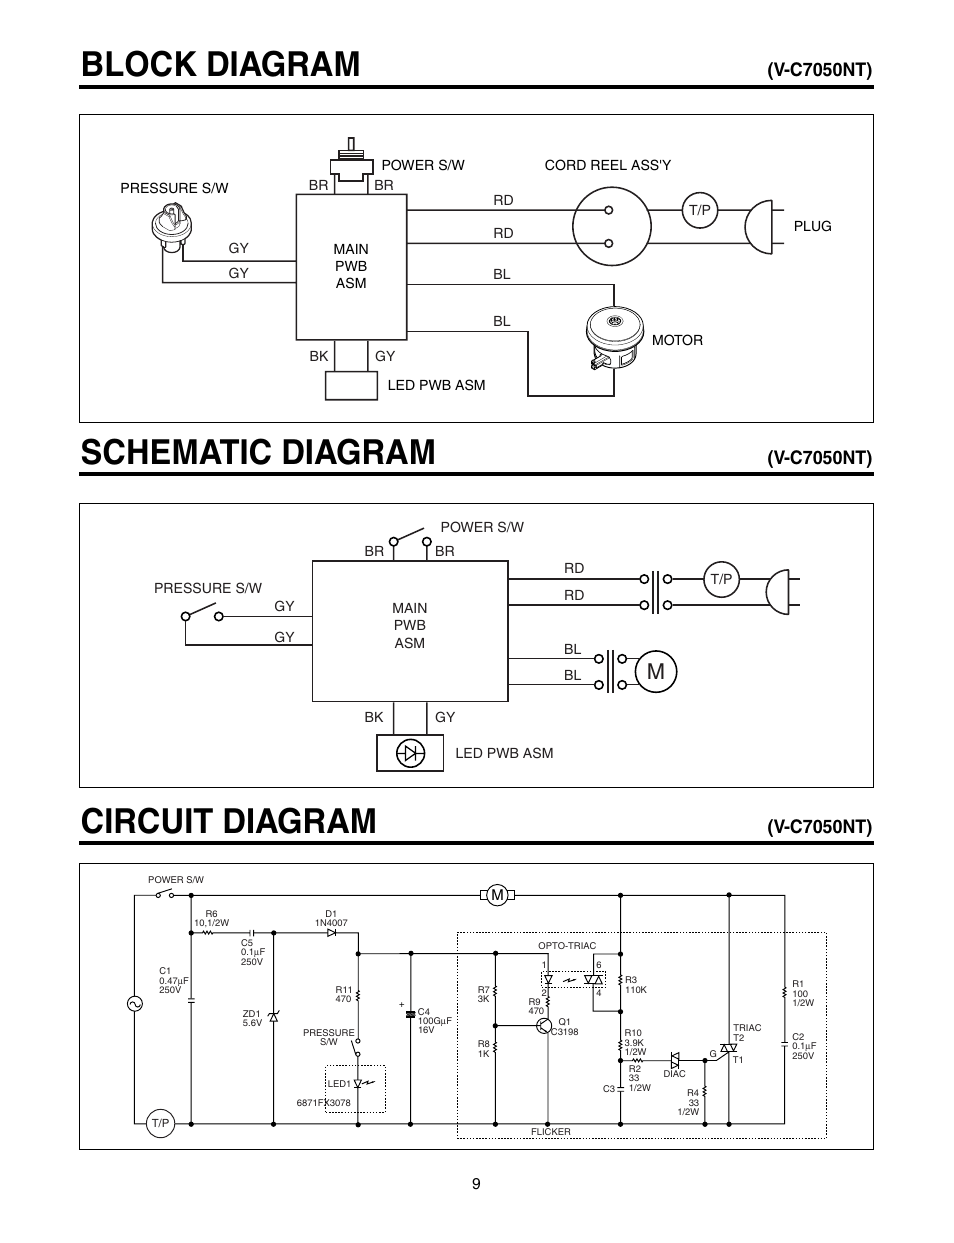 Block diagram, Schematic diagram, Circuit diagram | V-c7050nt) | LG V-C7050HT User Manual | Page 9 / 23